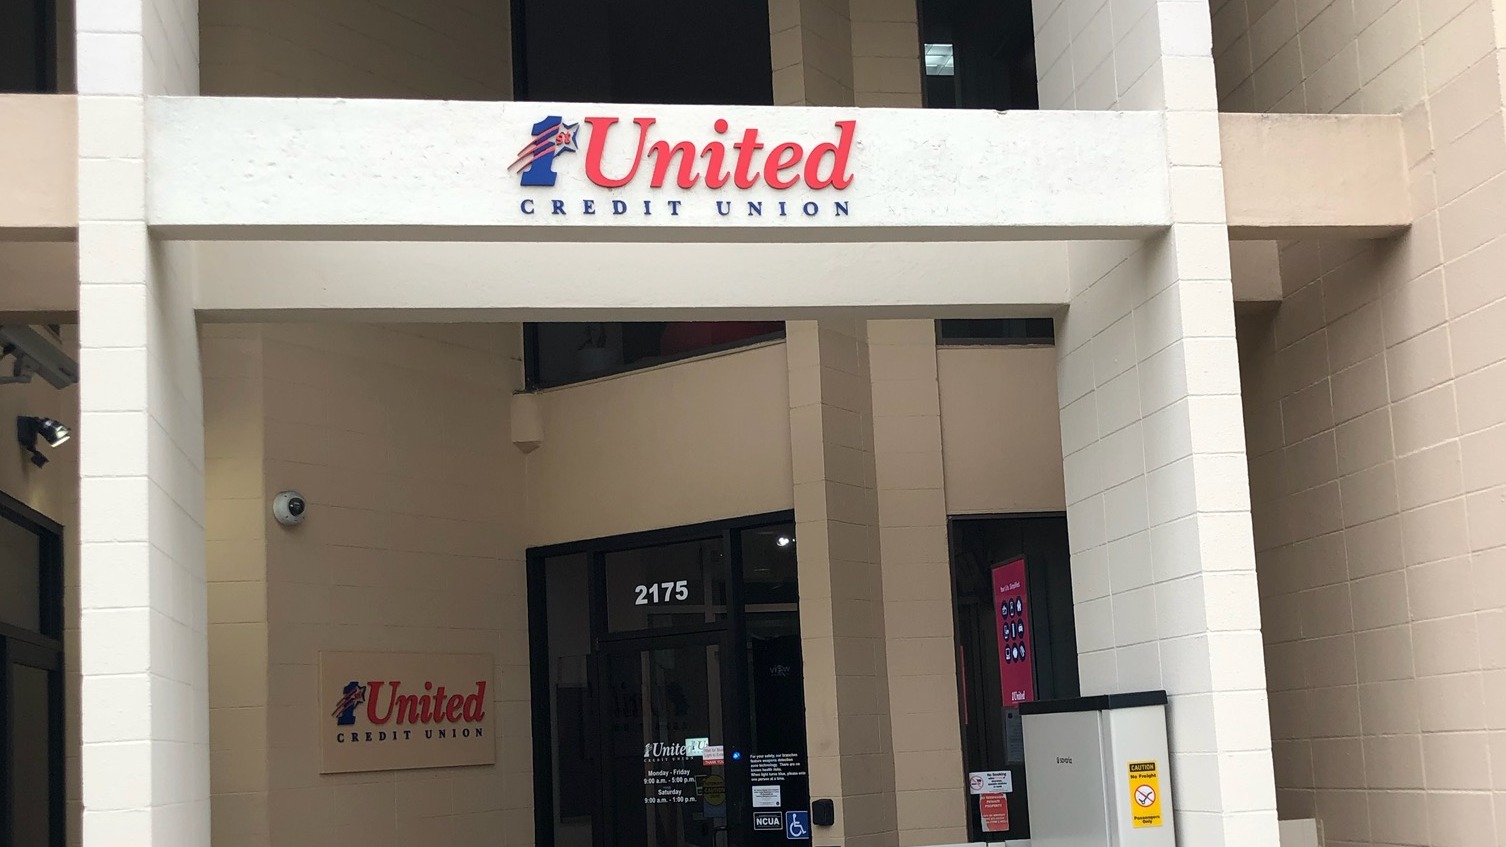 1st United Credit Union